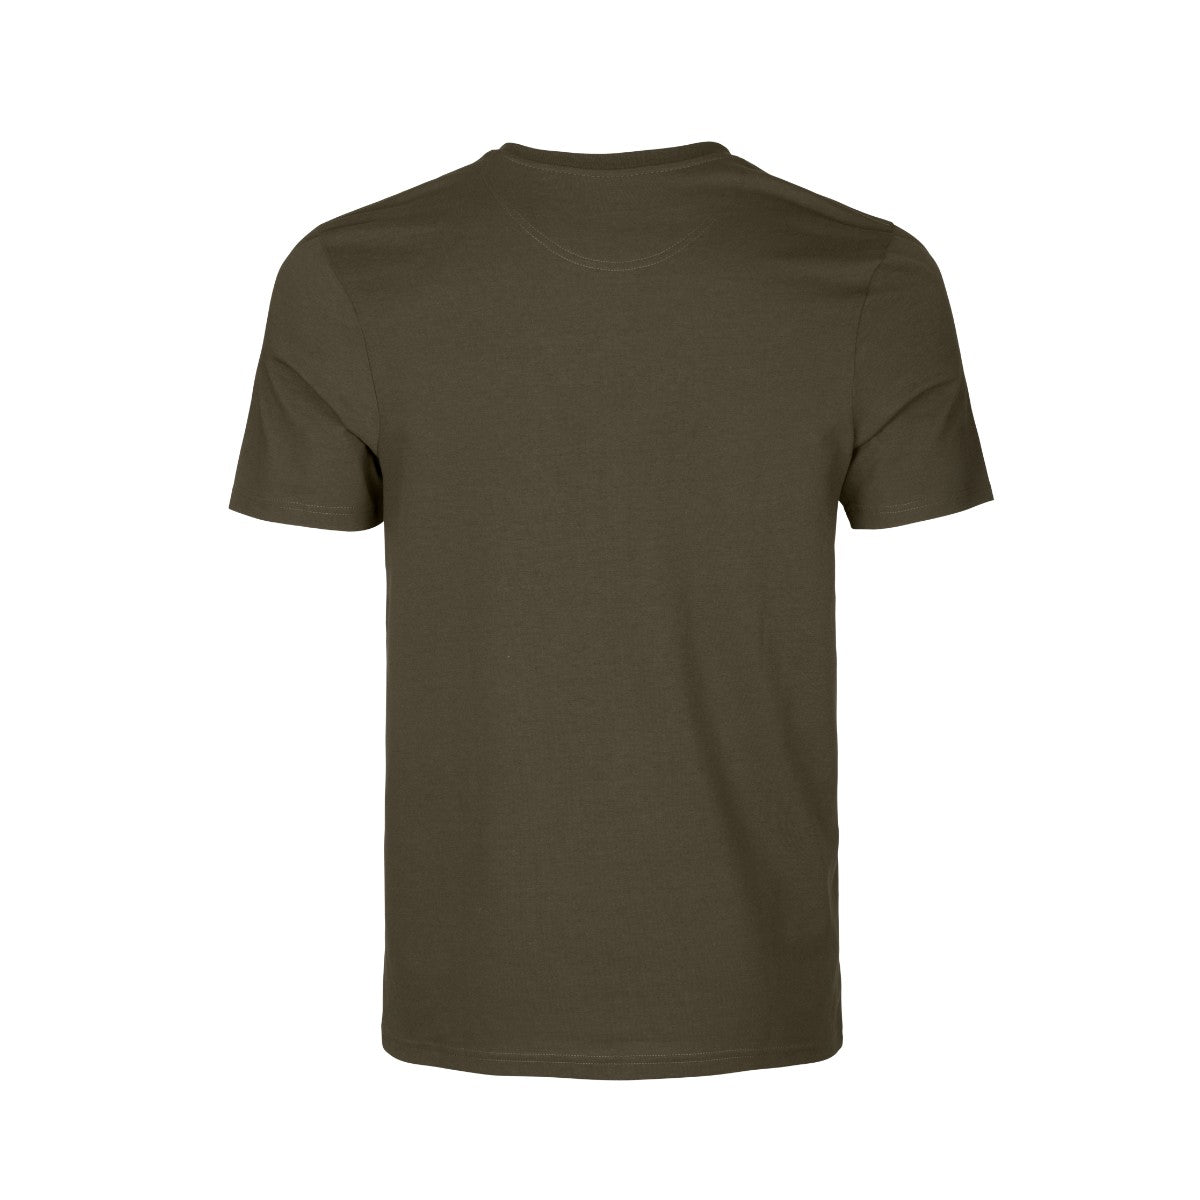 Seeland Kestrel T-shirt | Cluny Country 